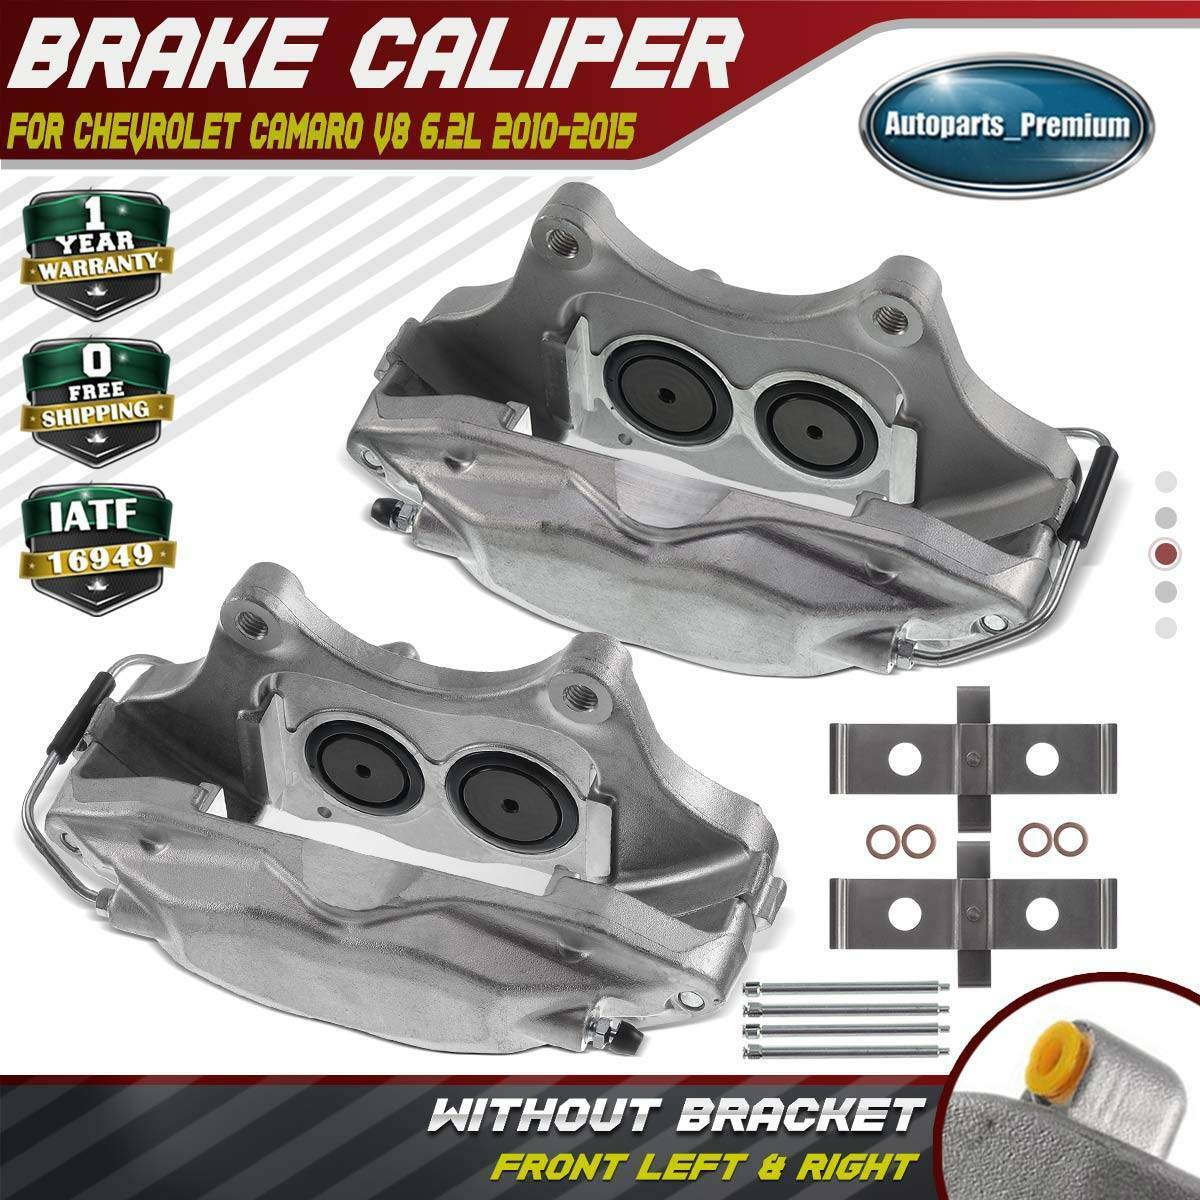 2pcs Disc Brake Caliper for Chevrolet Camaro 2010-2015 6.2L Front Left & Right